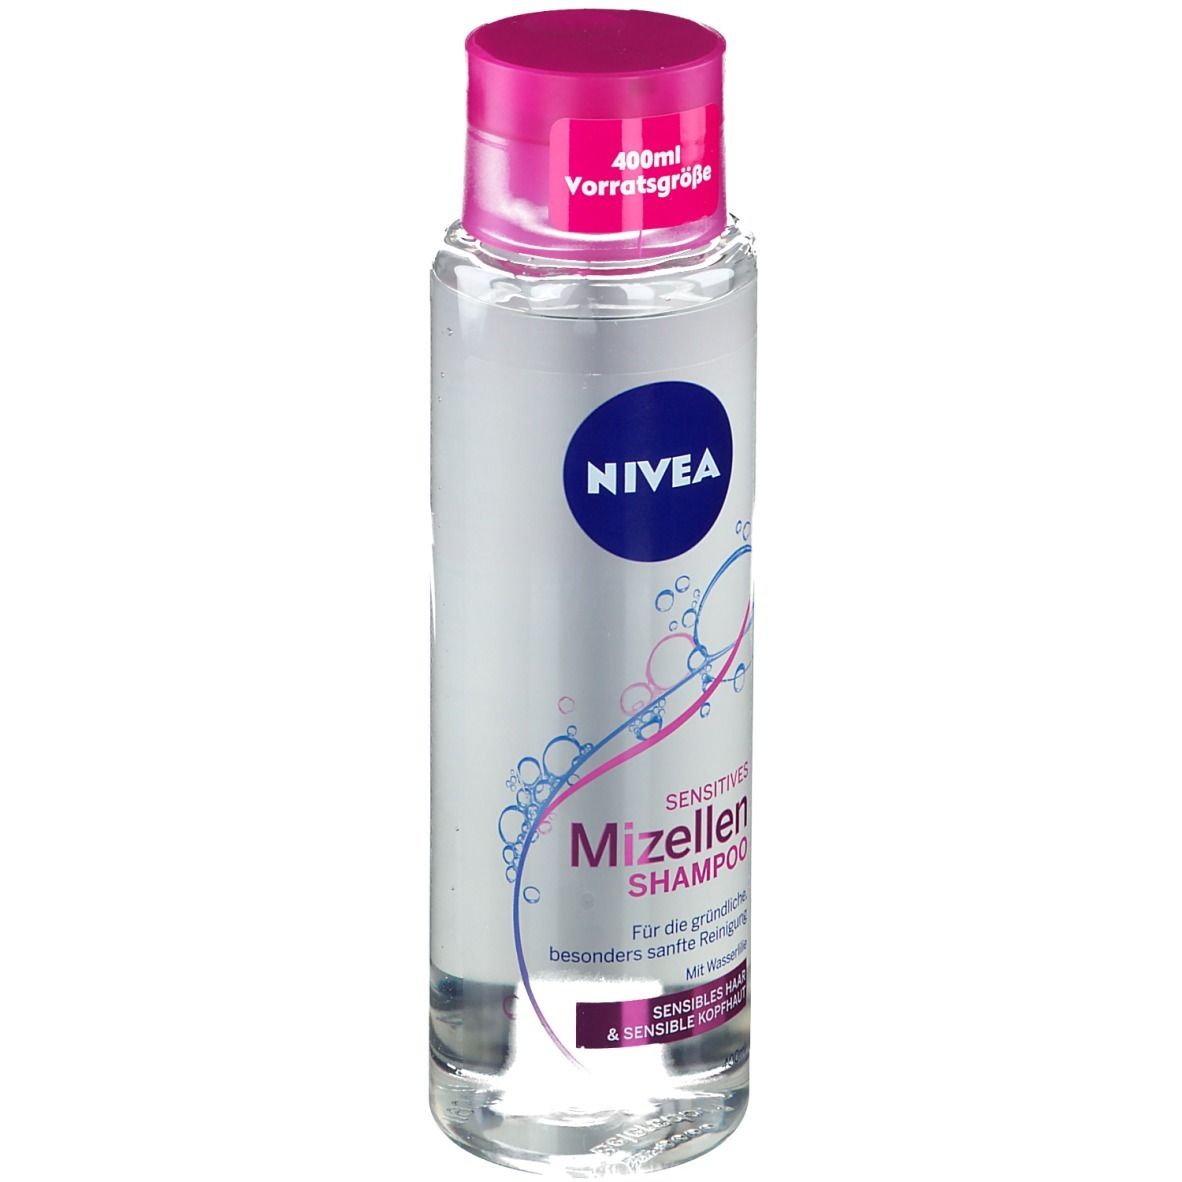 NIVEA® Hair Care Sensitives Mizellen Shampoo